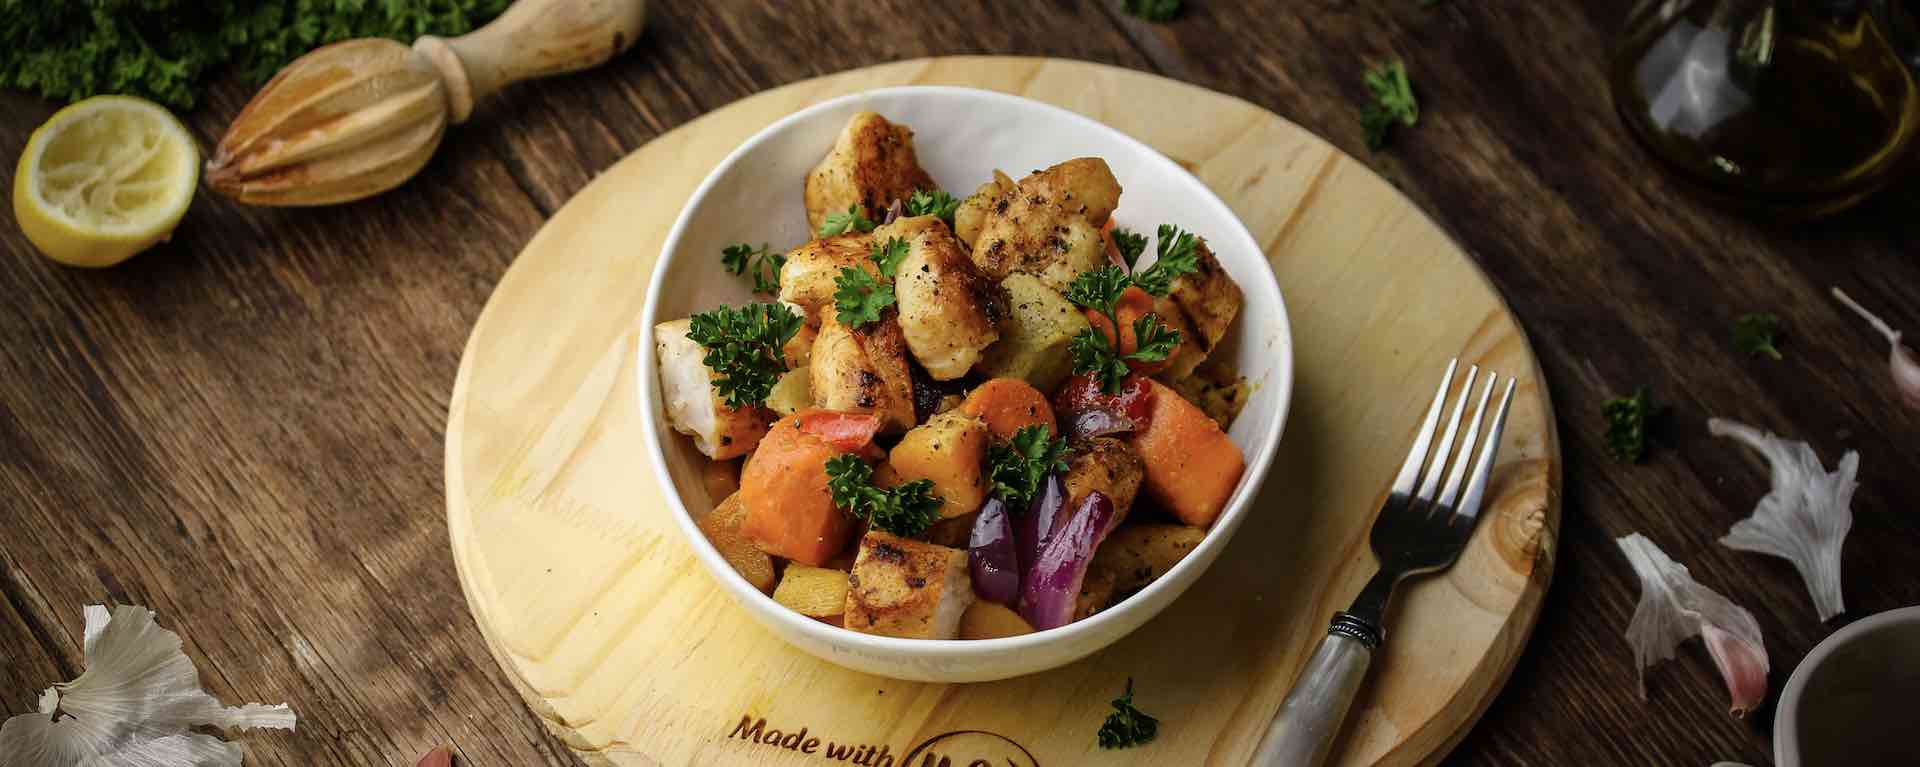 Spiced Fish & Roast Veg Salad